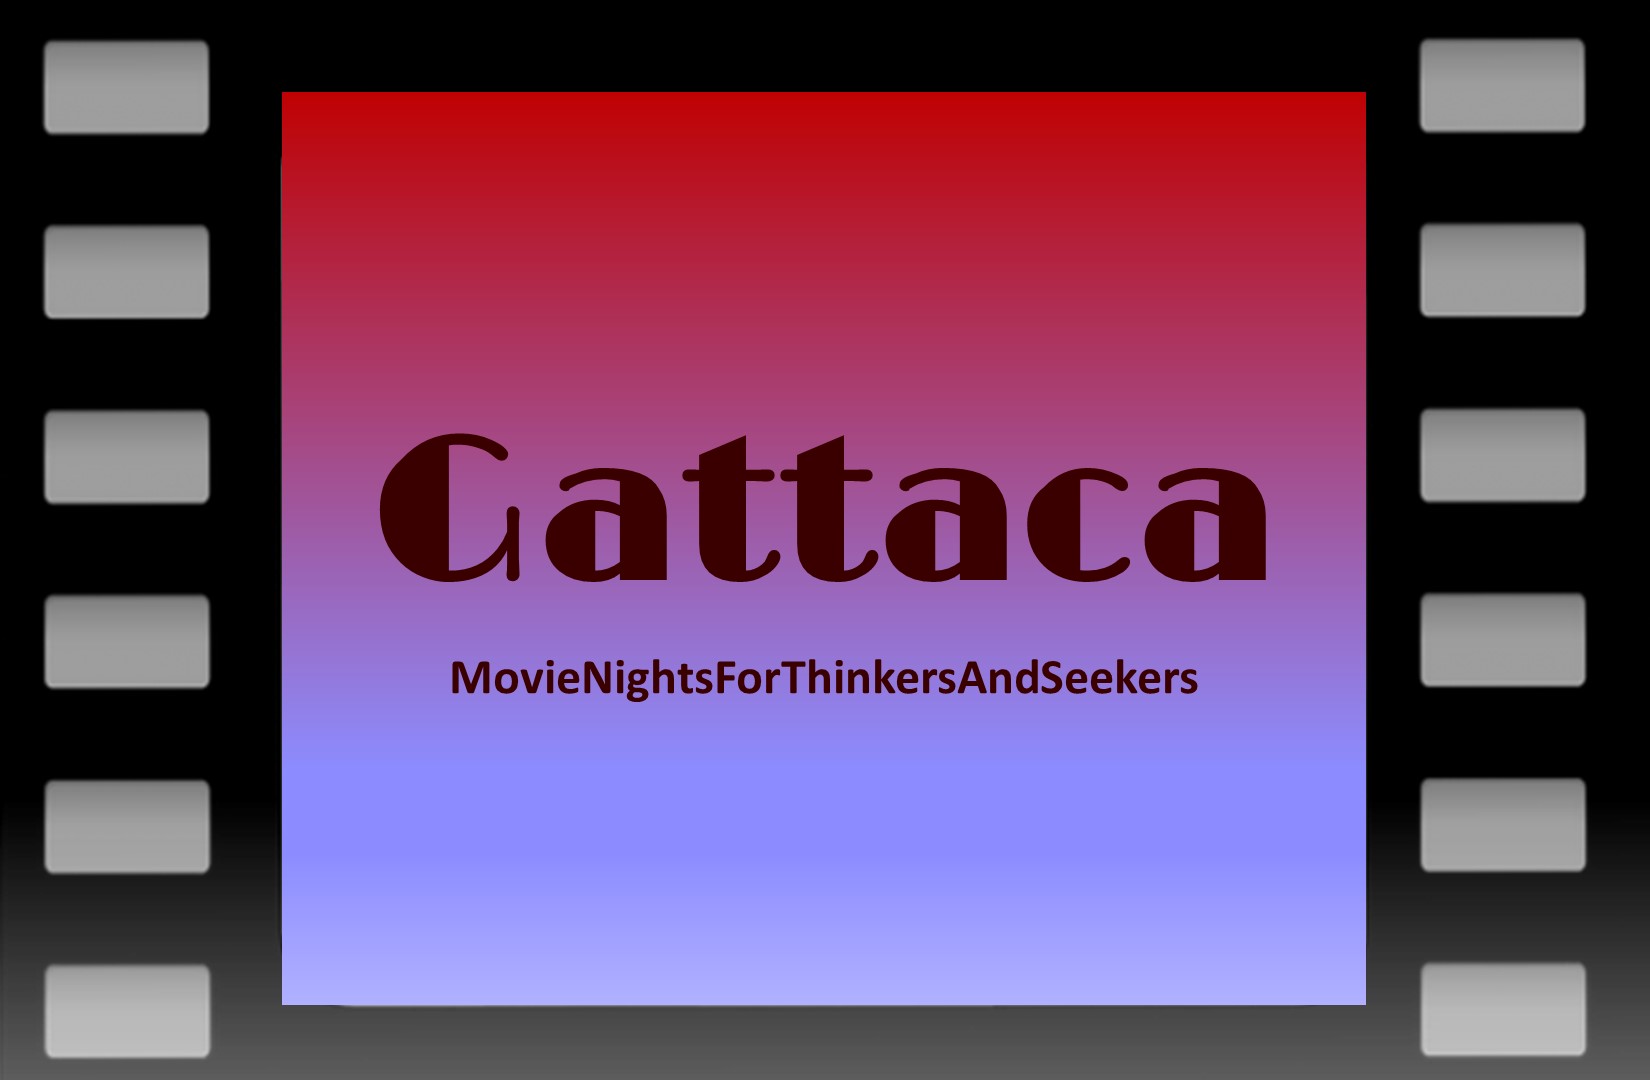 Gattaca (Movie Night previews)